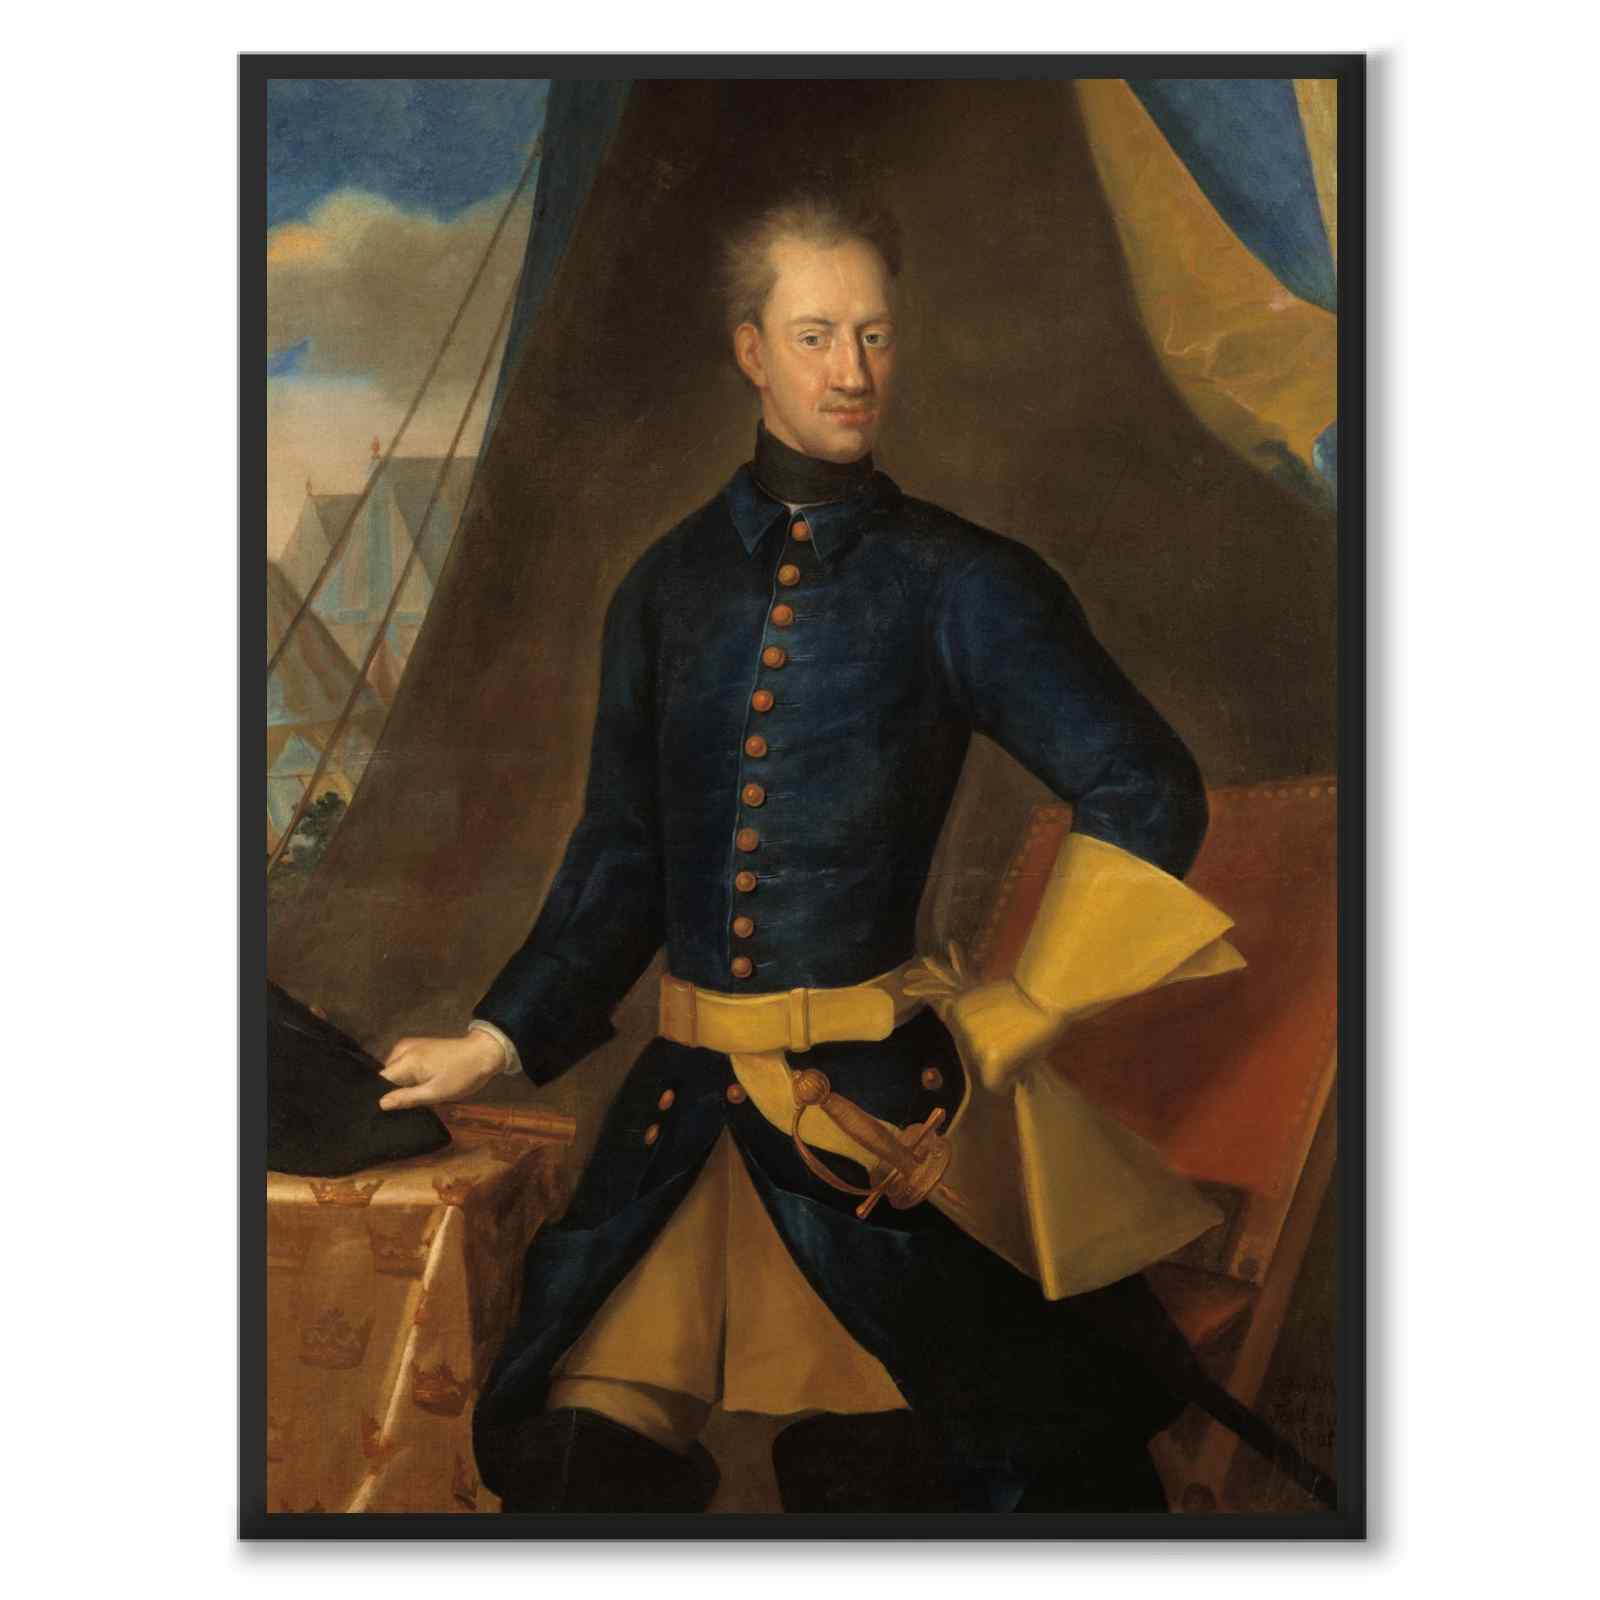 Karl XII - Poster